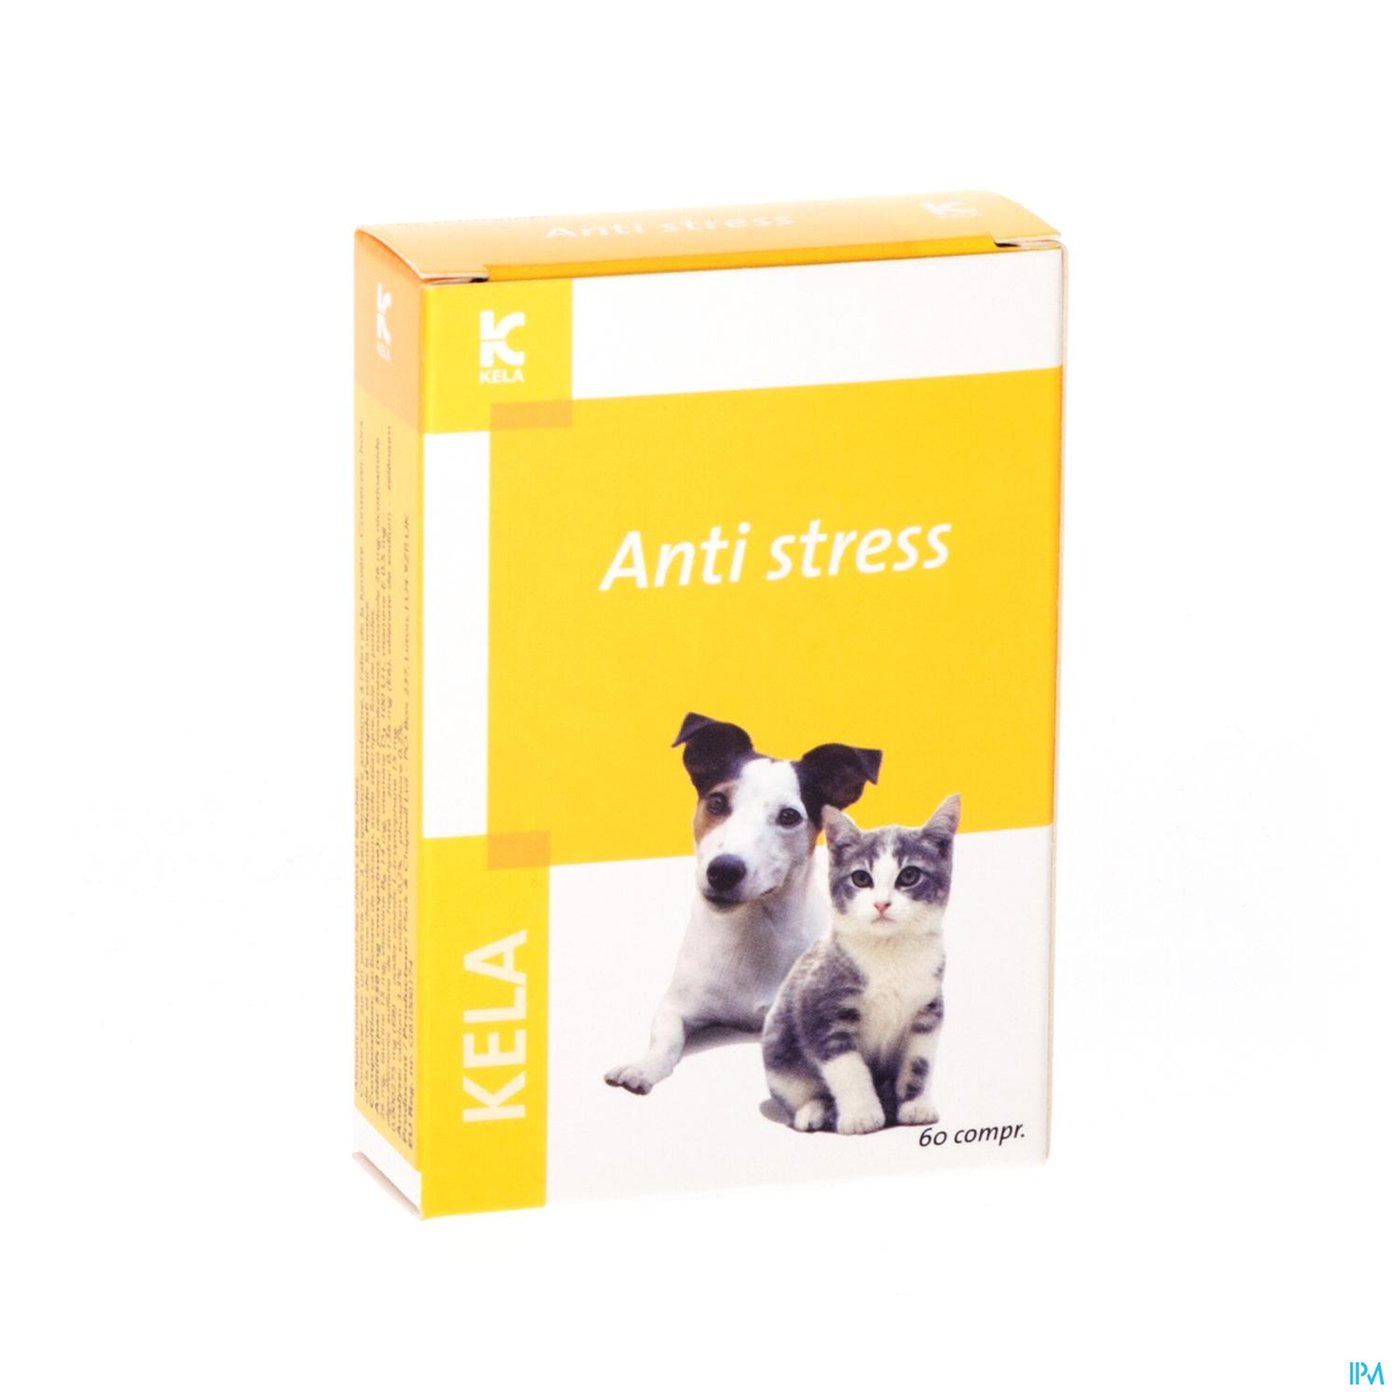 Anti Stress Comp 60 packshot